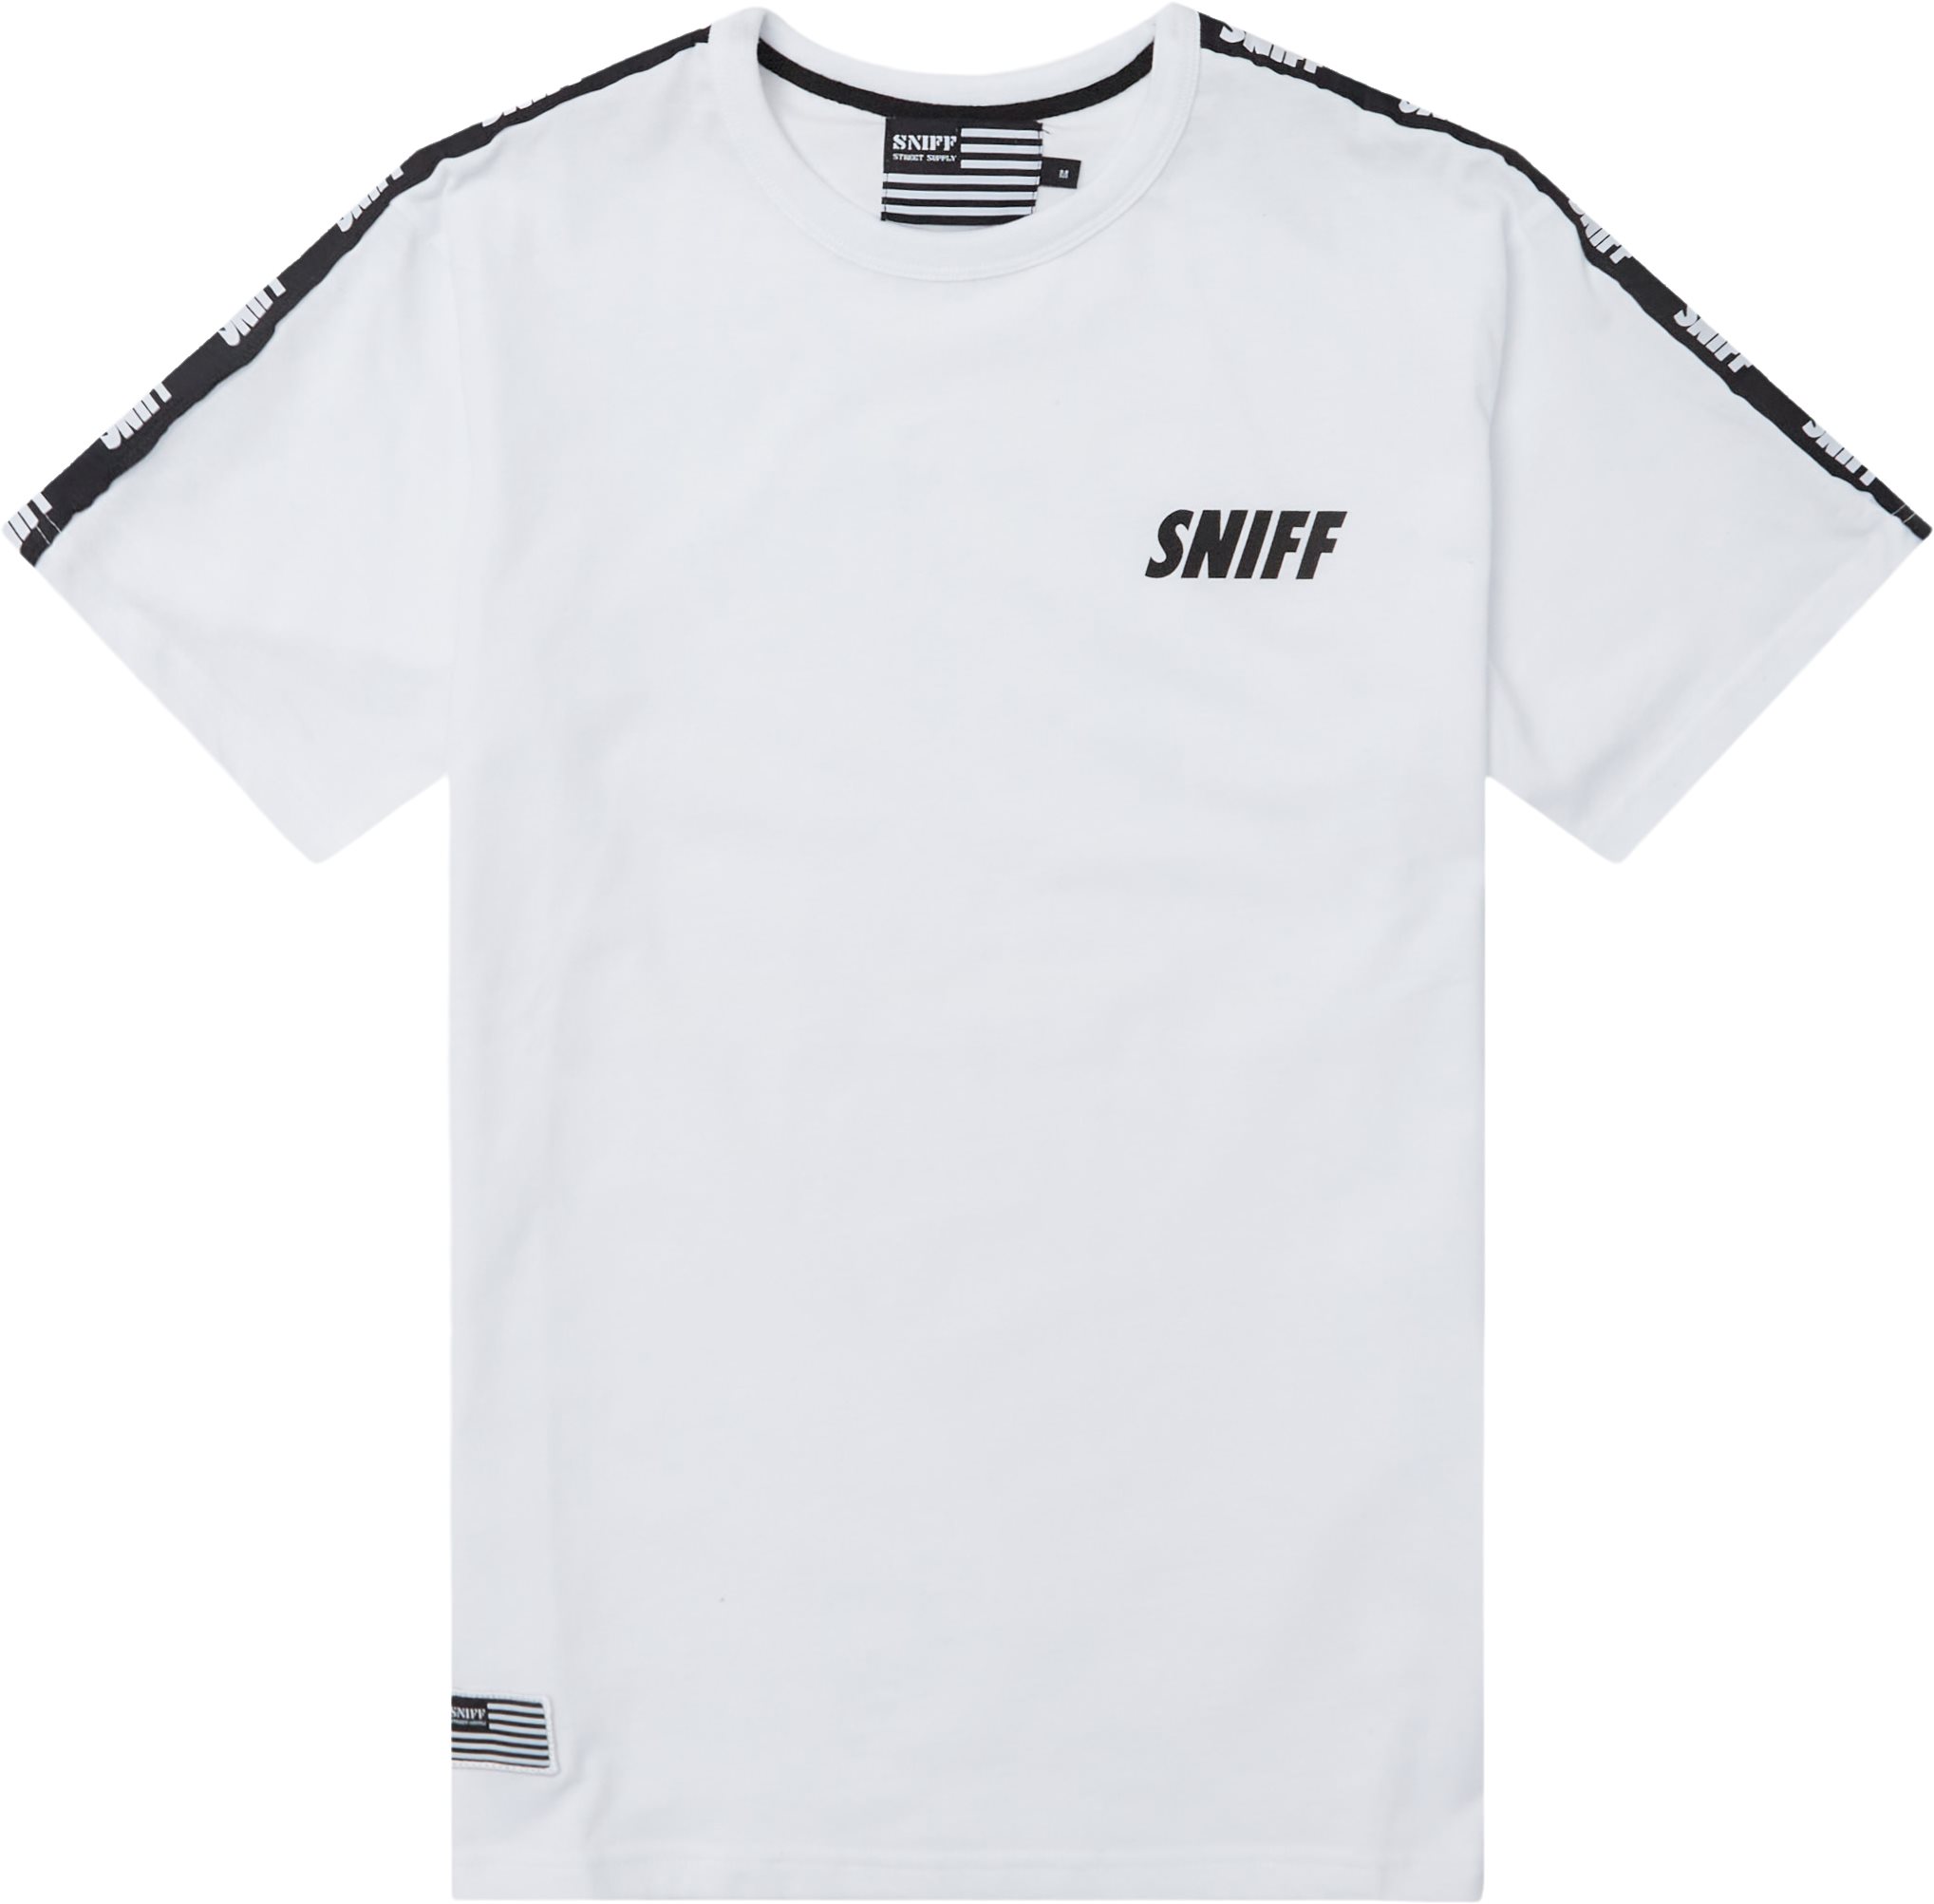 Pointe Tee - T-shirts - Regular fit - Hvid